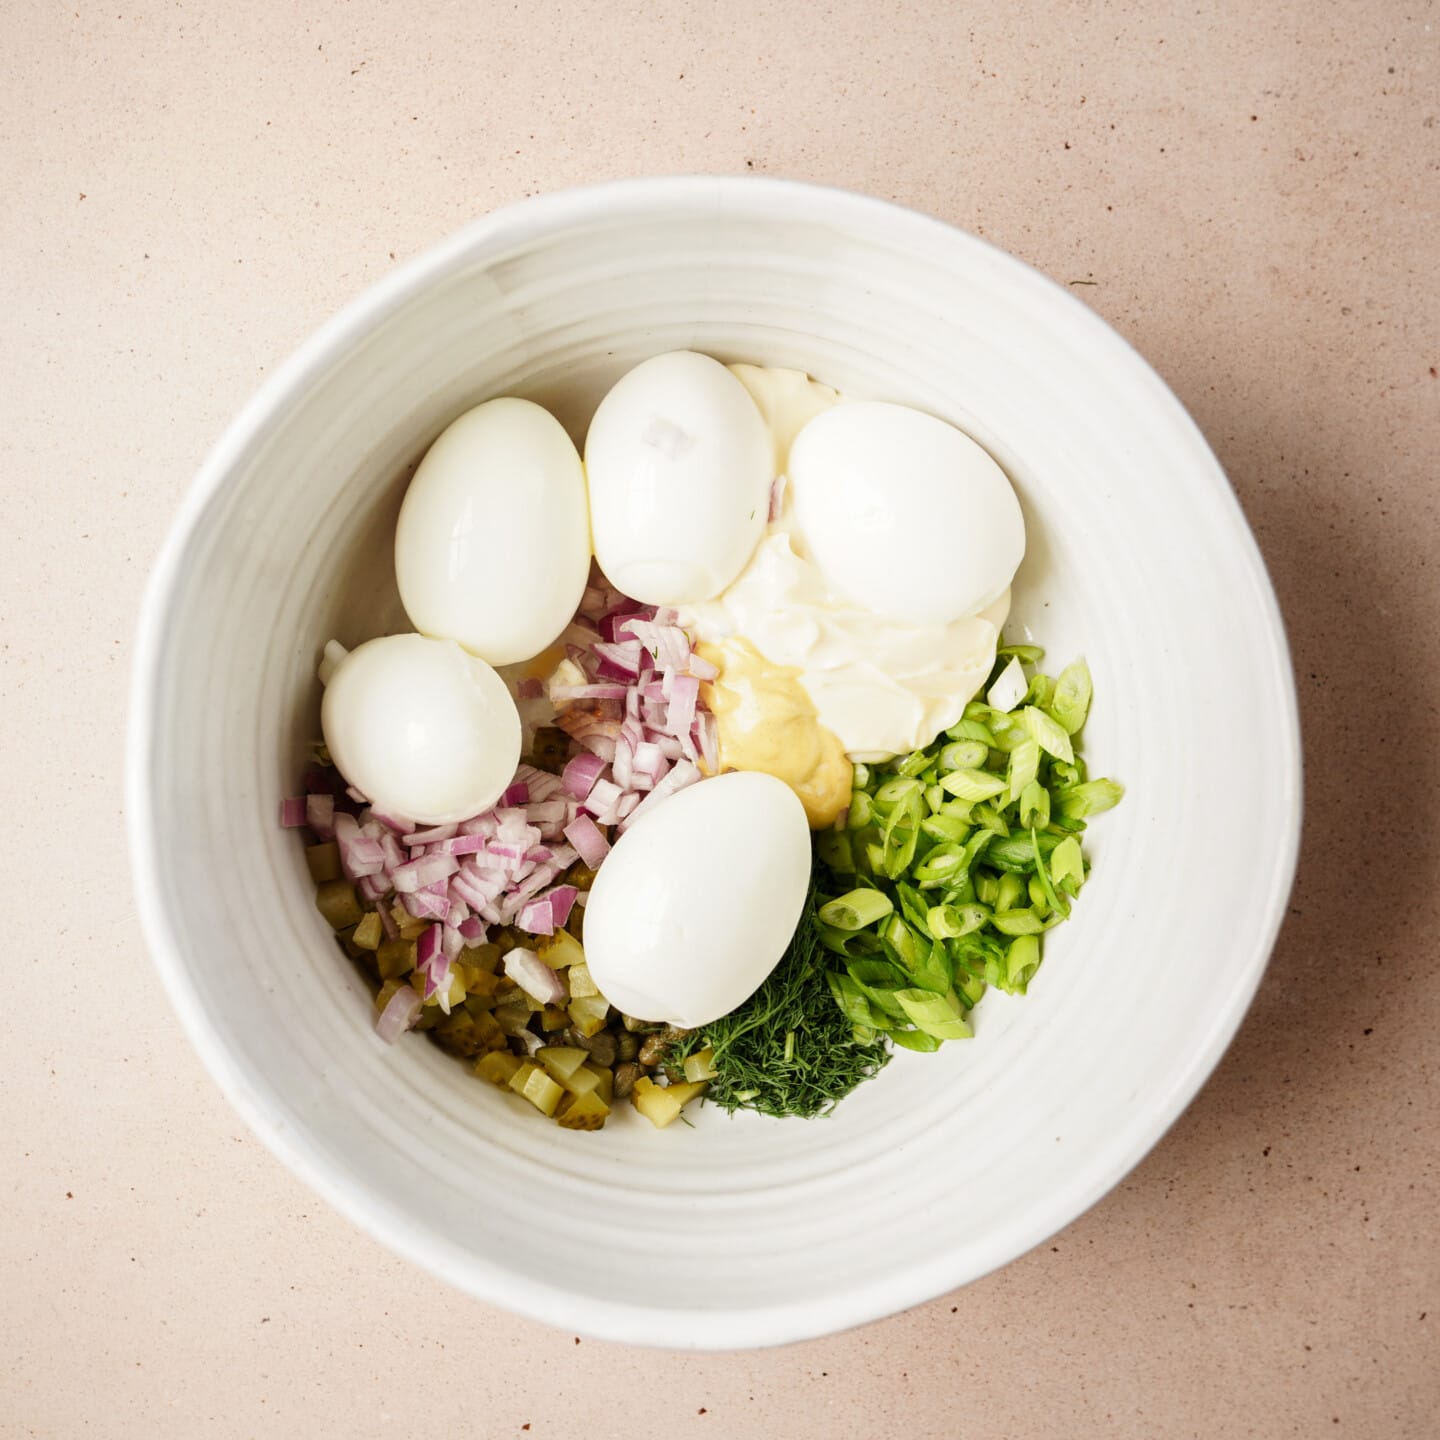 Easy Egg Salad Ingredients